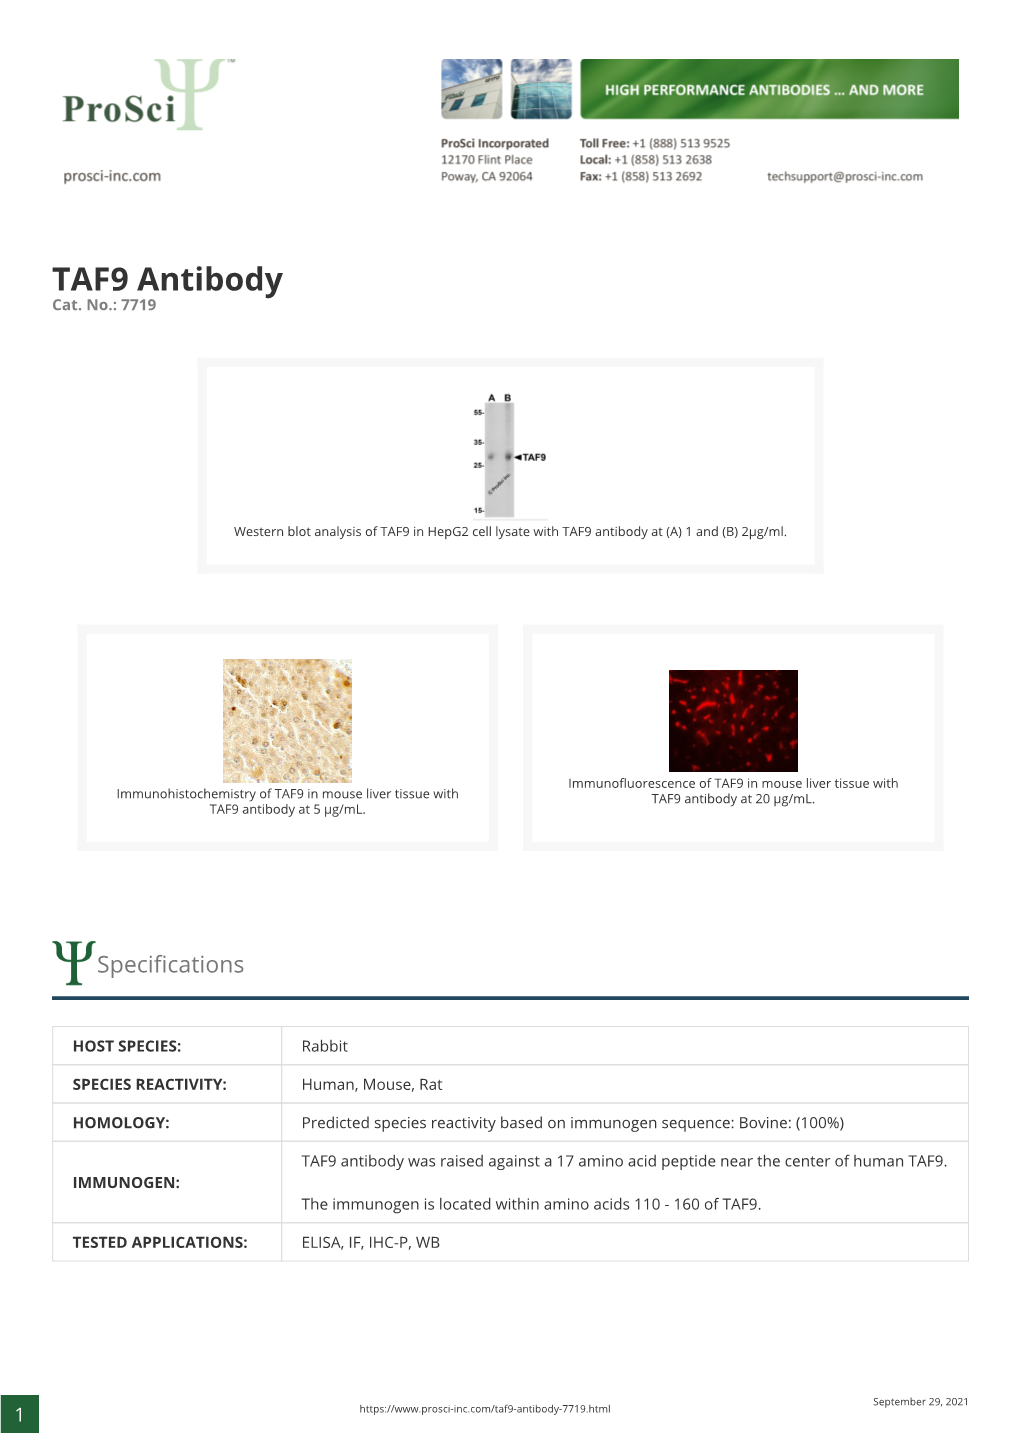 TAF9 Antibody Cat